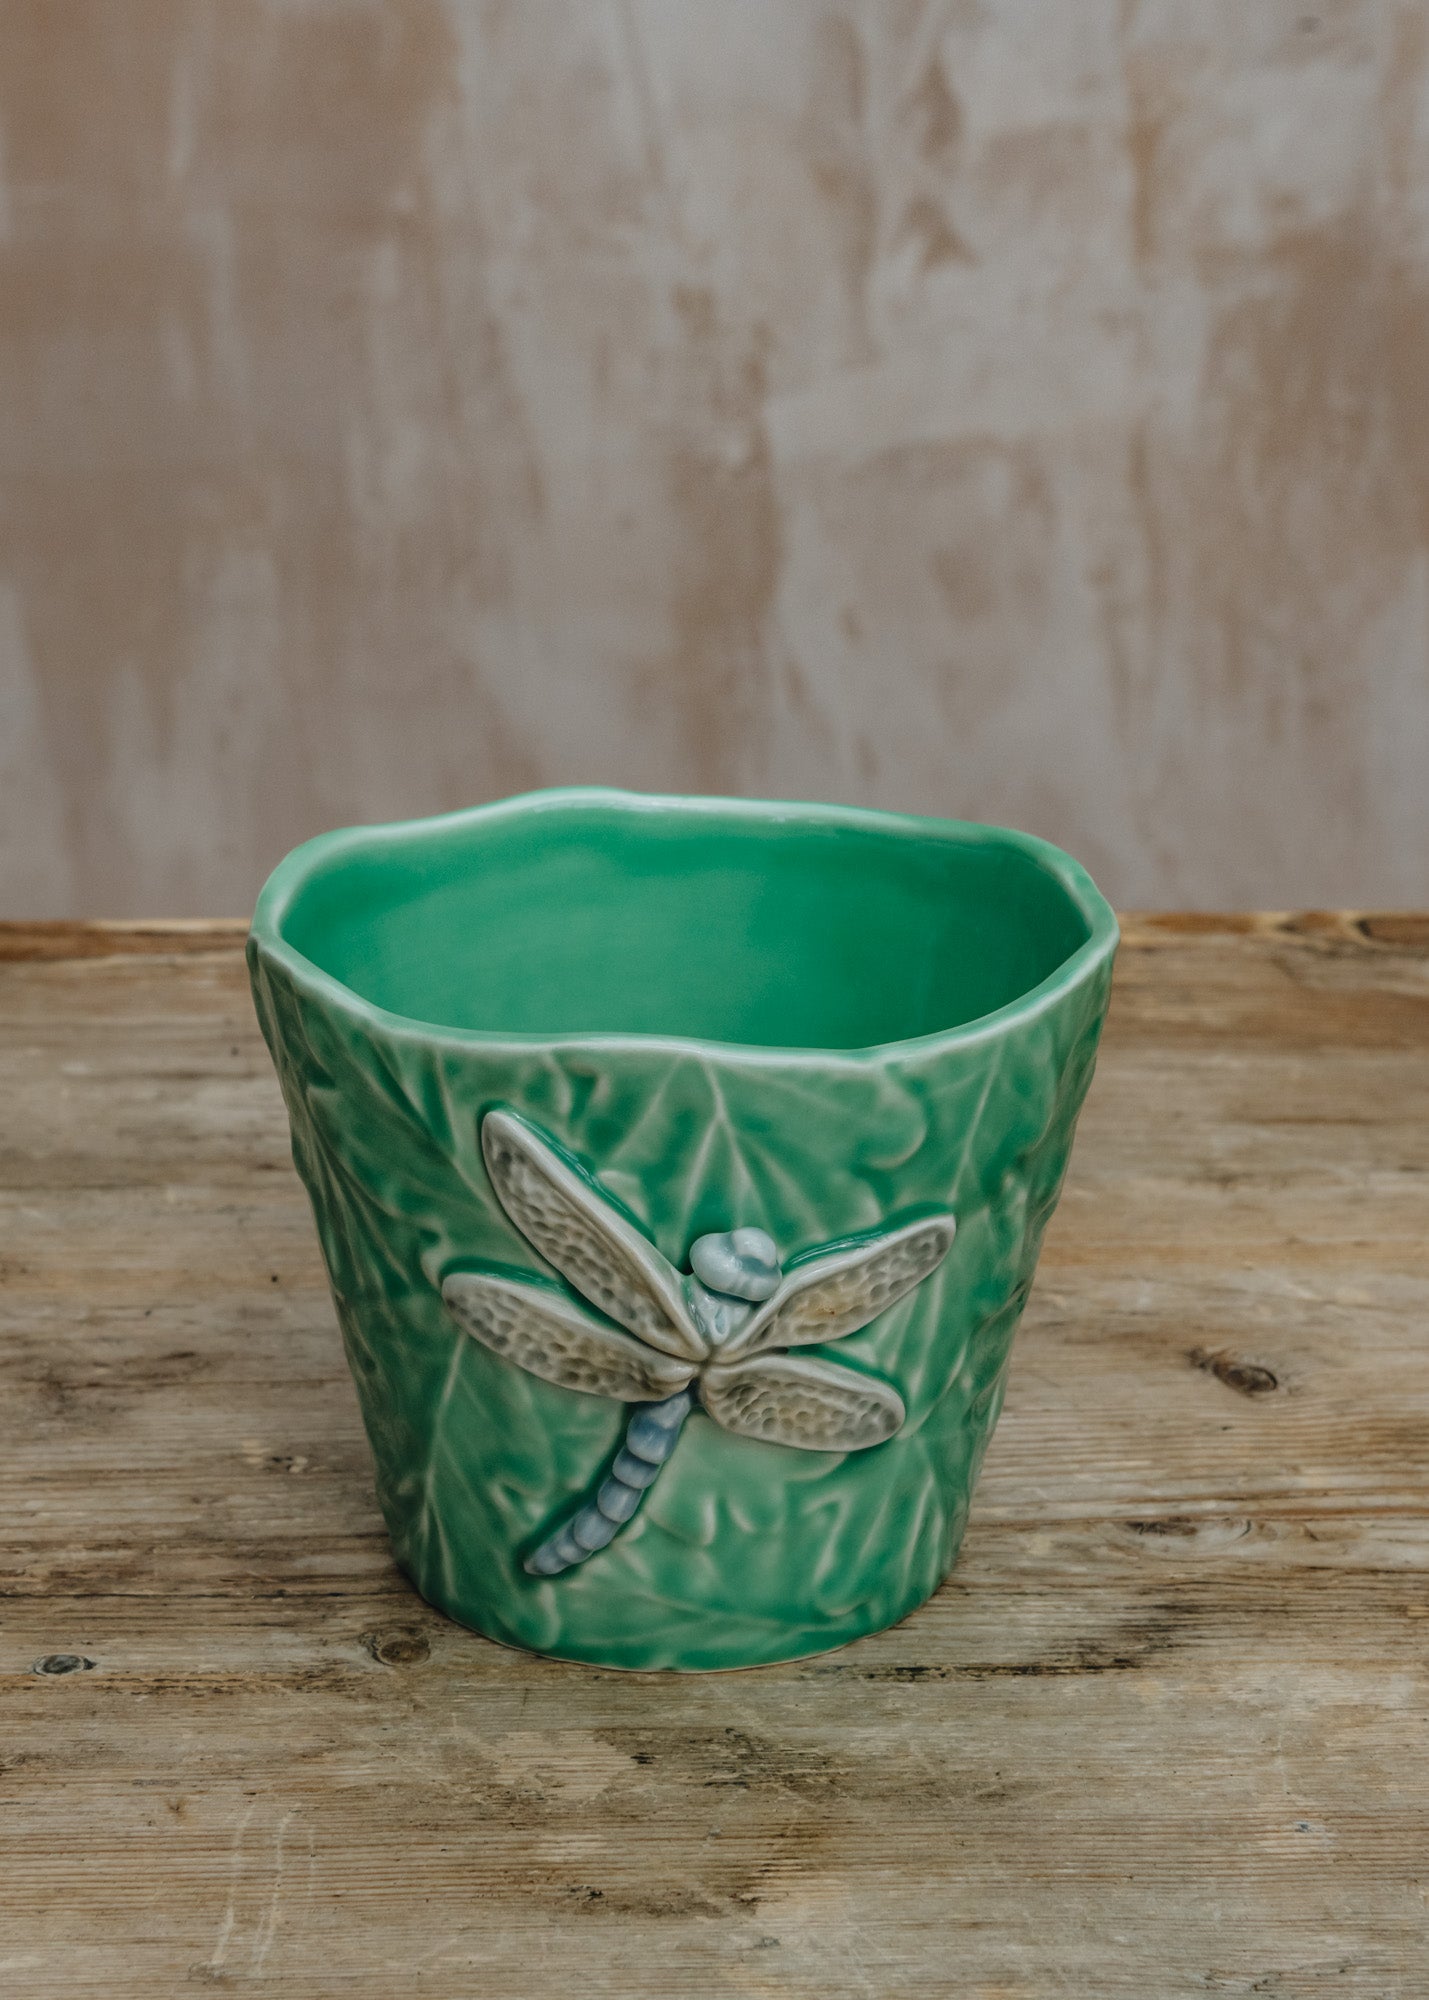 Bordhallo Pinheiro Dragonfly Vase/Pot Cover